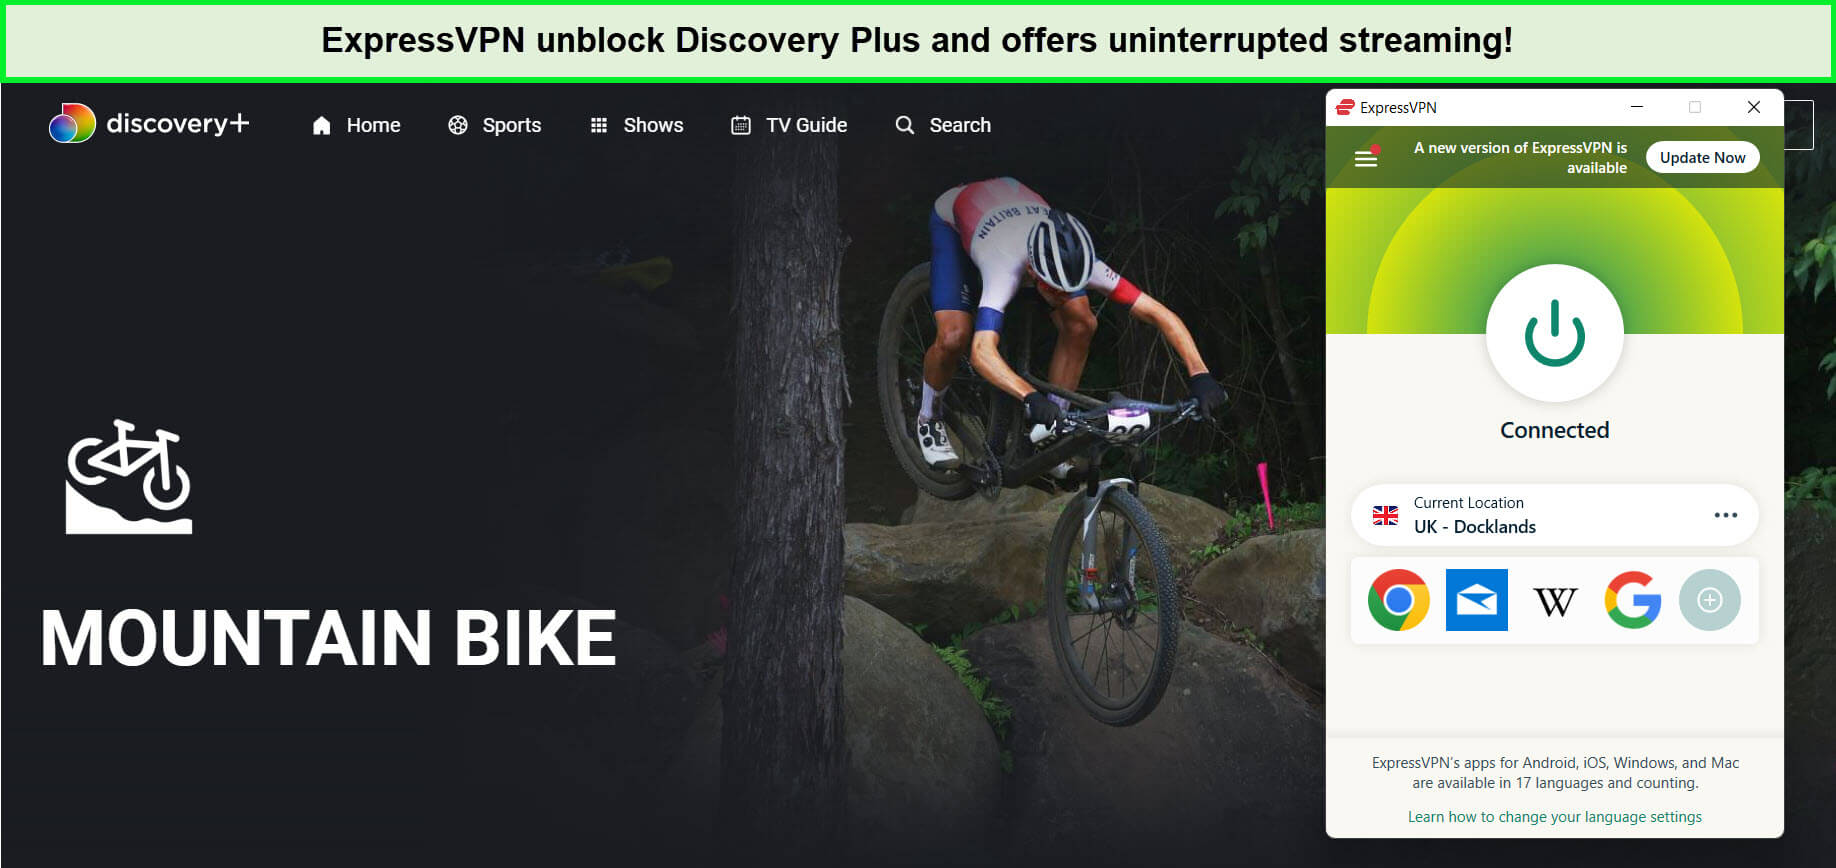 expressvpn-unblocks-uci-mountain-bike-world-series-in-UAE-discovery-plus